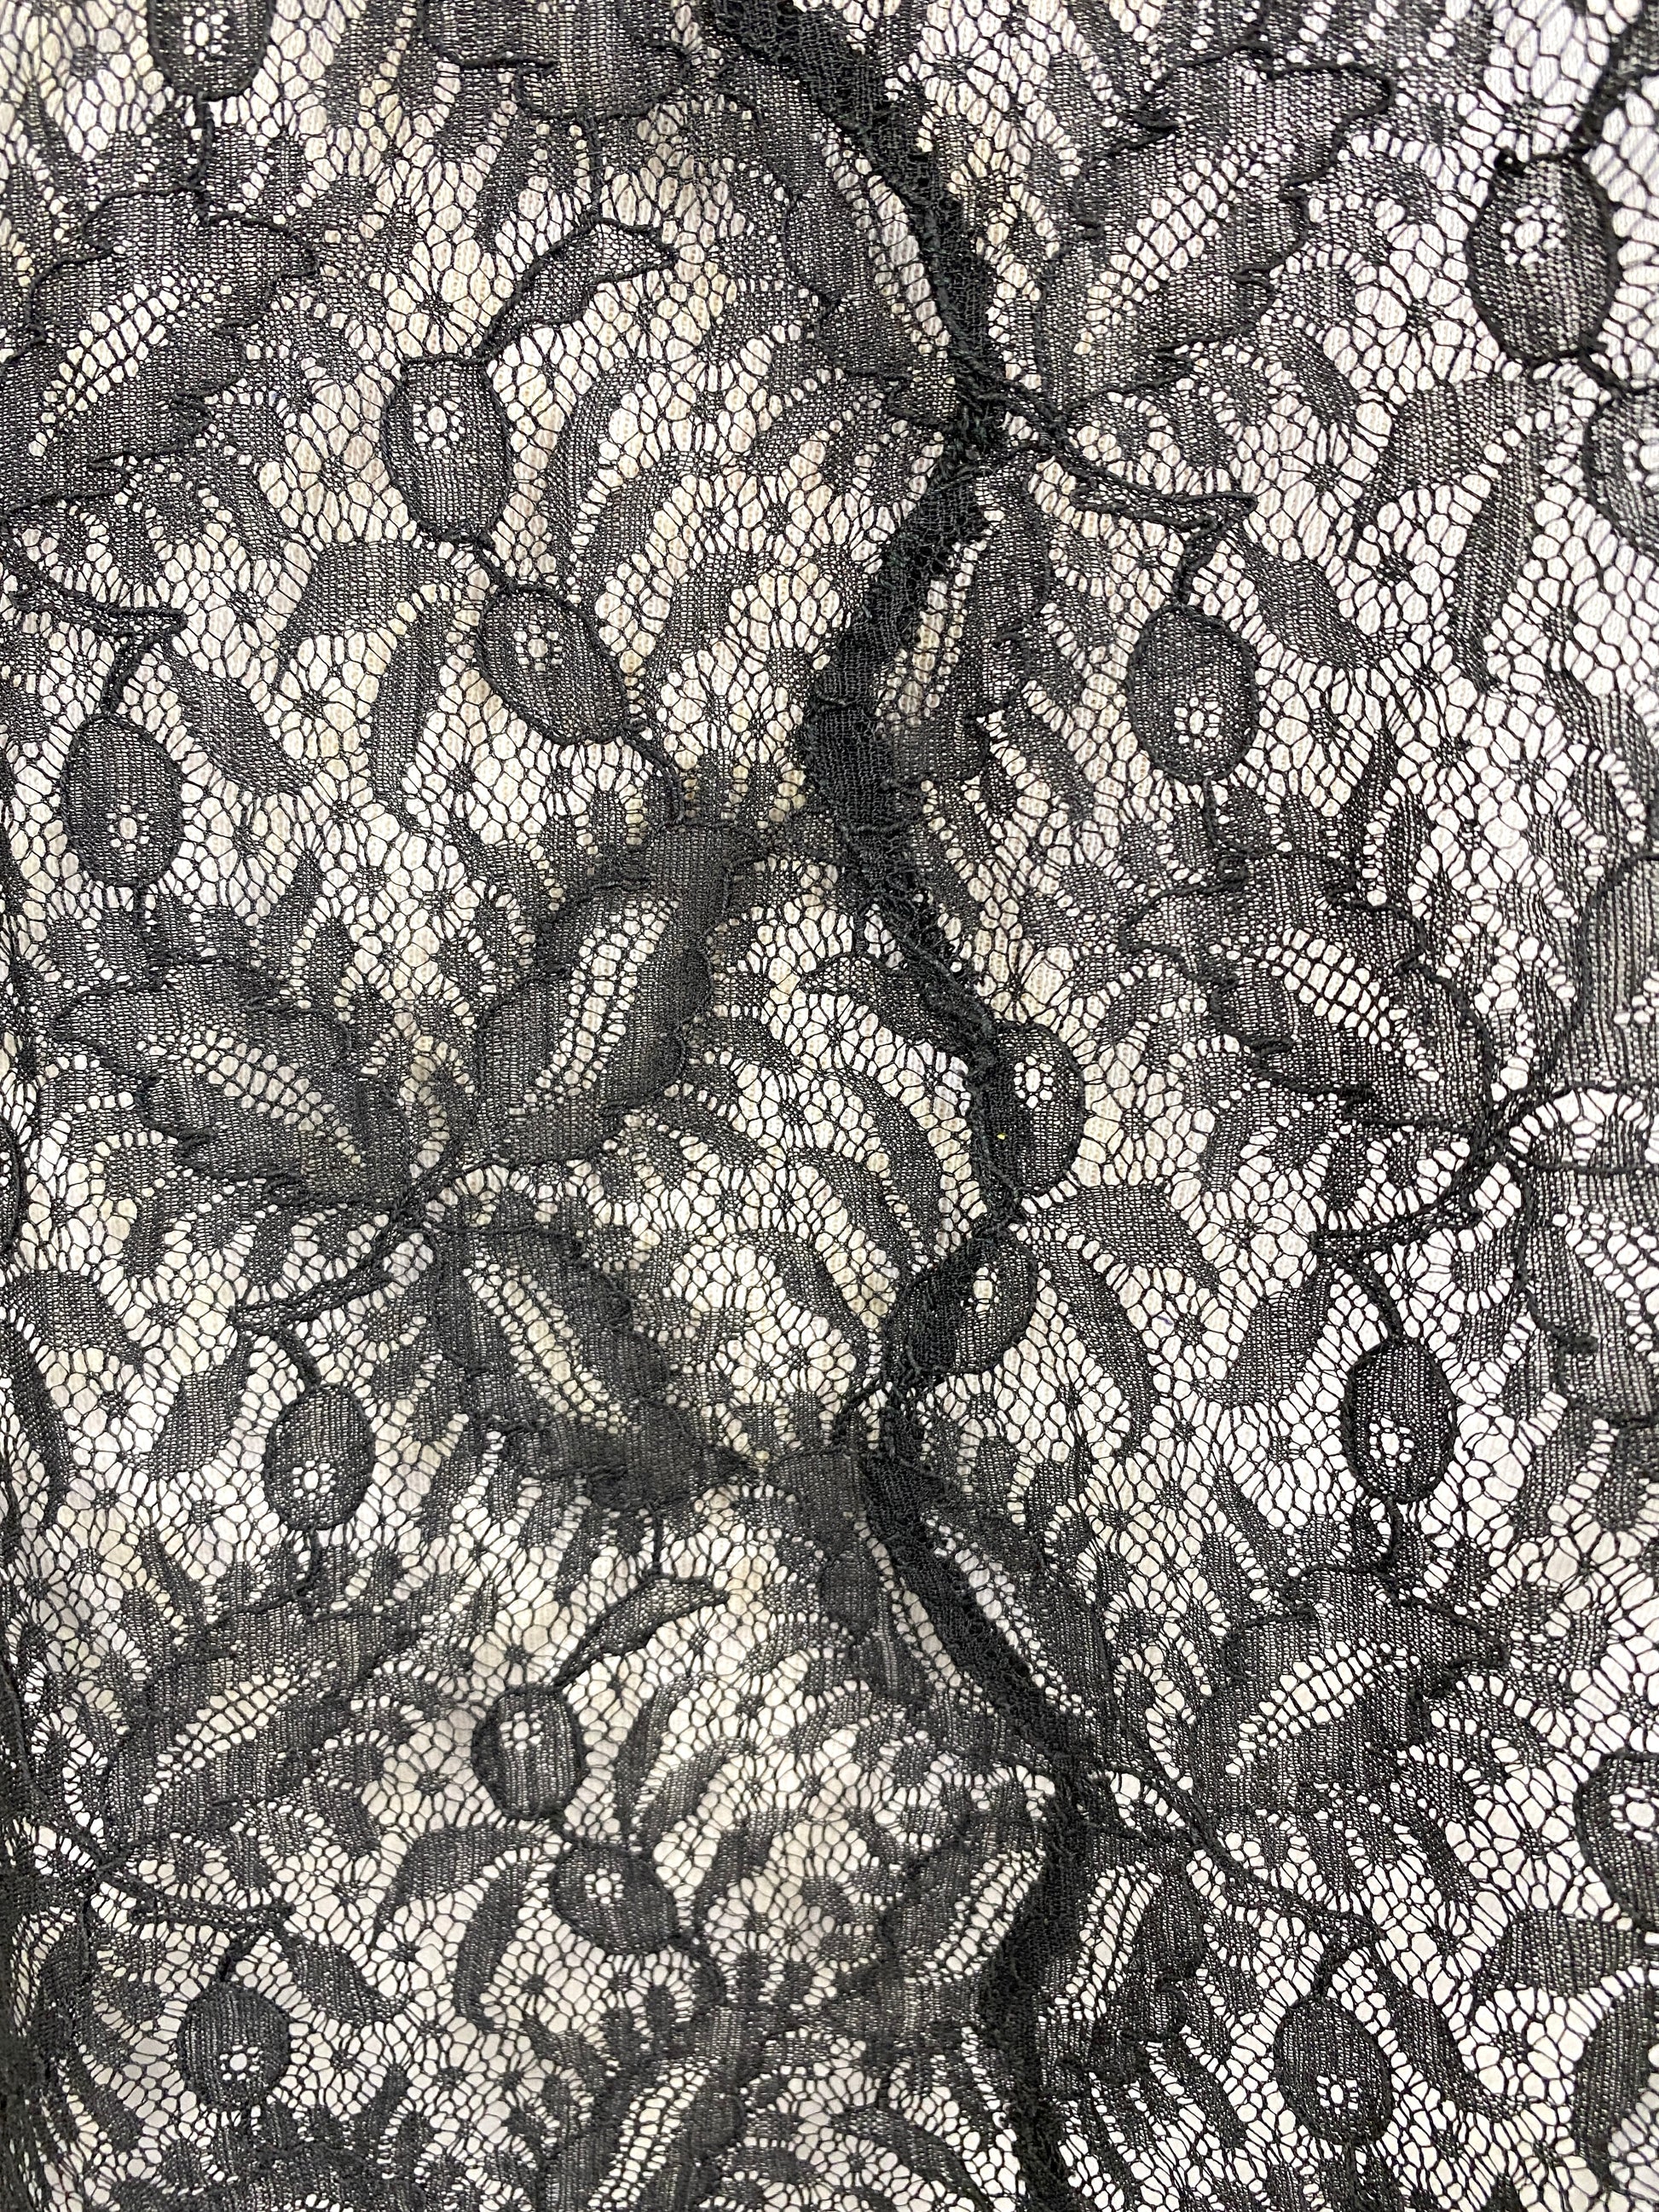 Black lace fabric close-up on 1960s dress. Ian Drummond Vintage. 